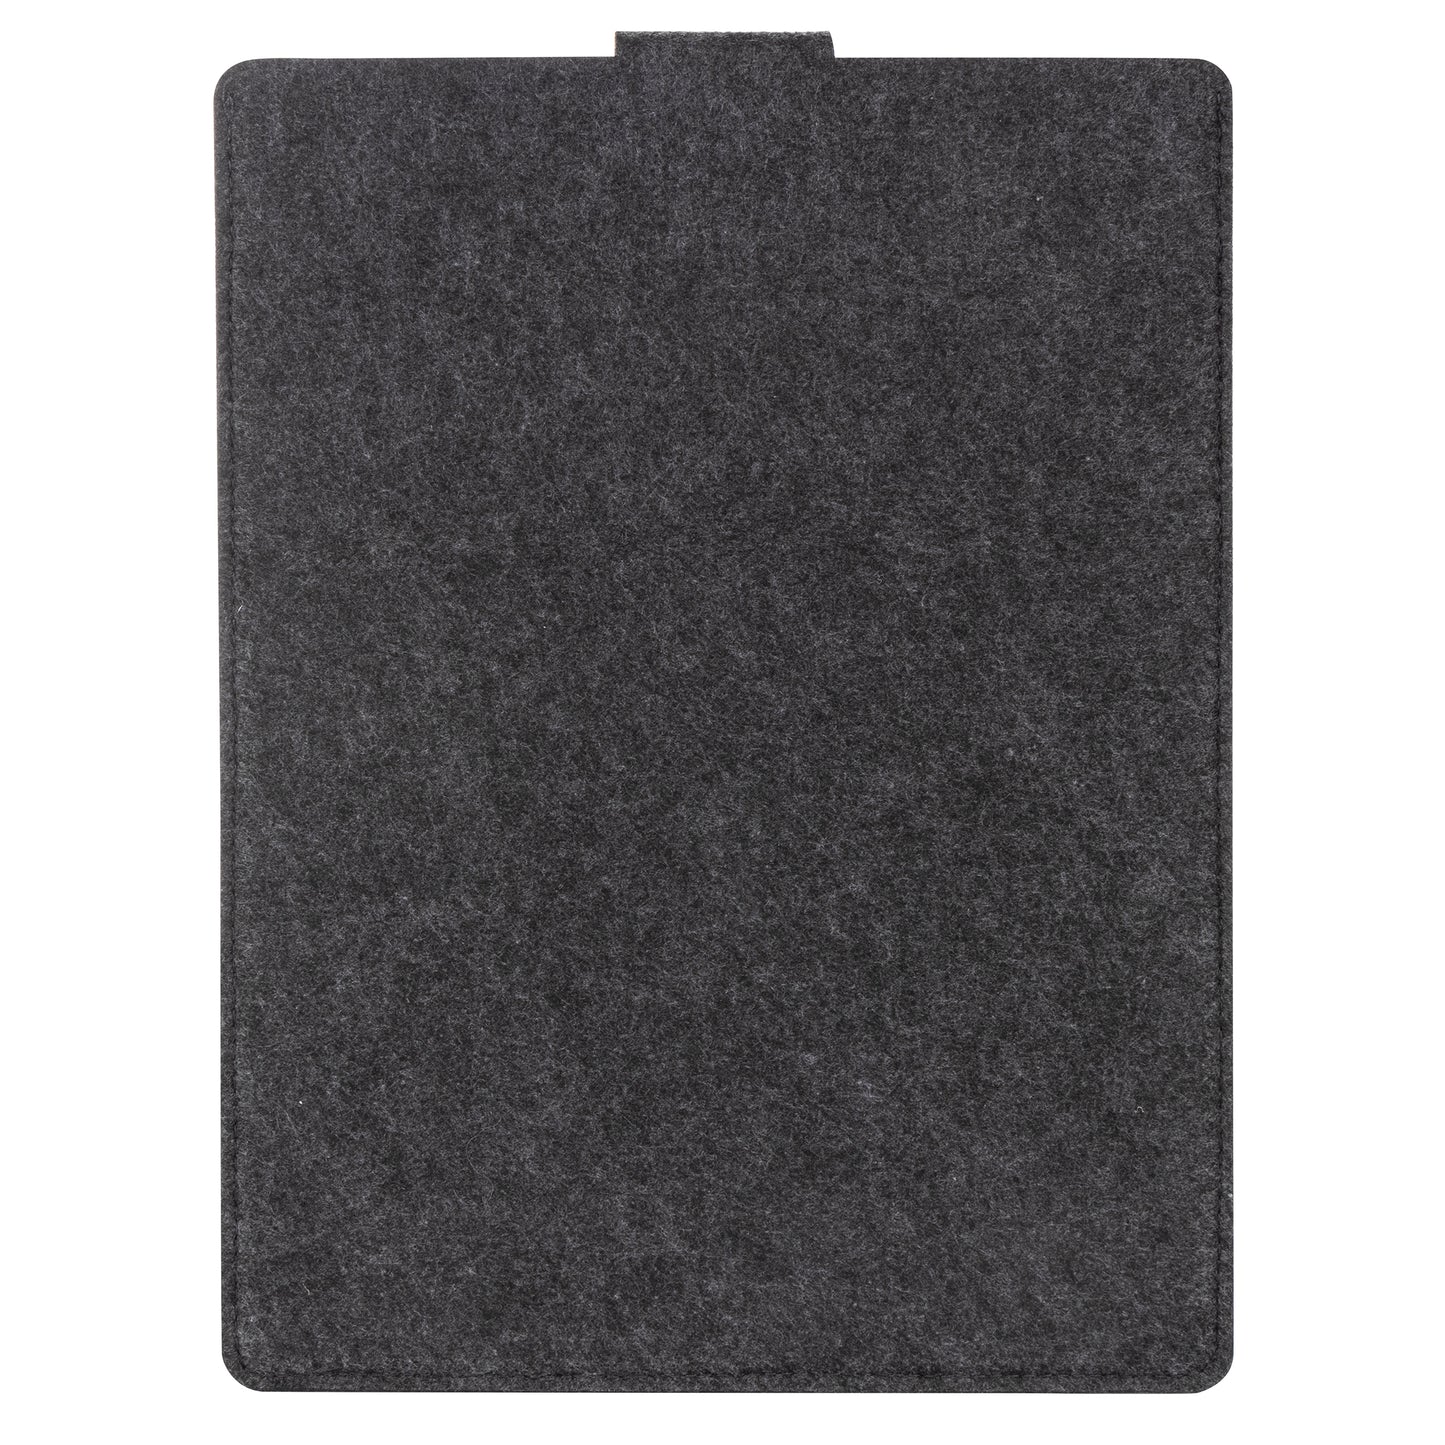 Charcoal Gray Felt Laptop Sleeve Carrying Case -